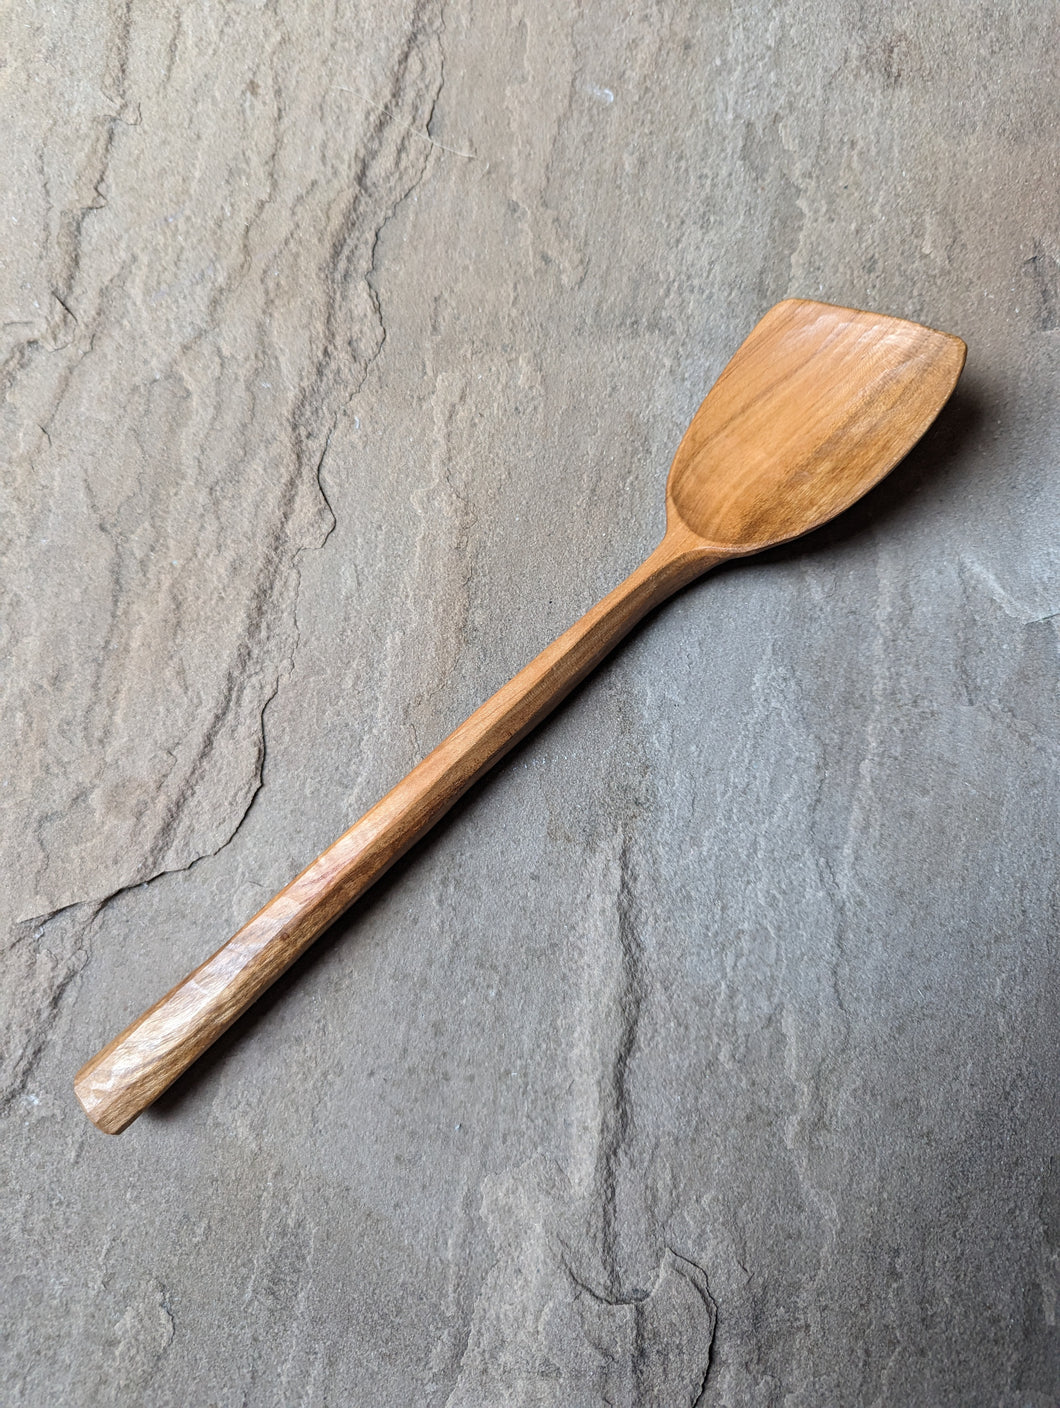 Asymmetrical cooking spoon